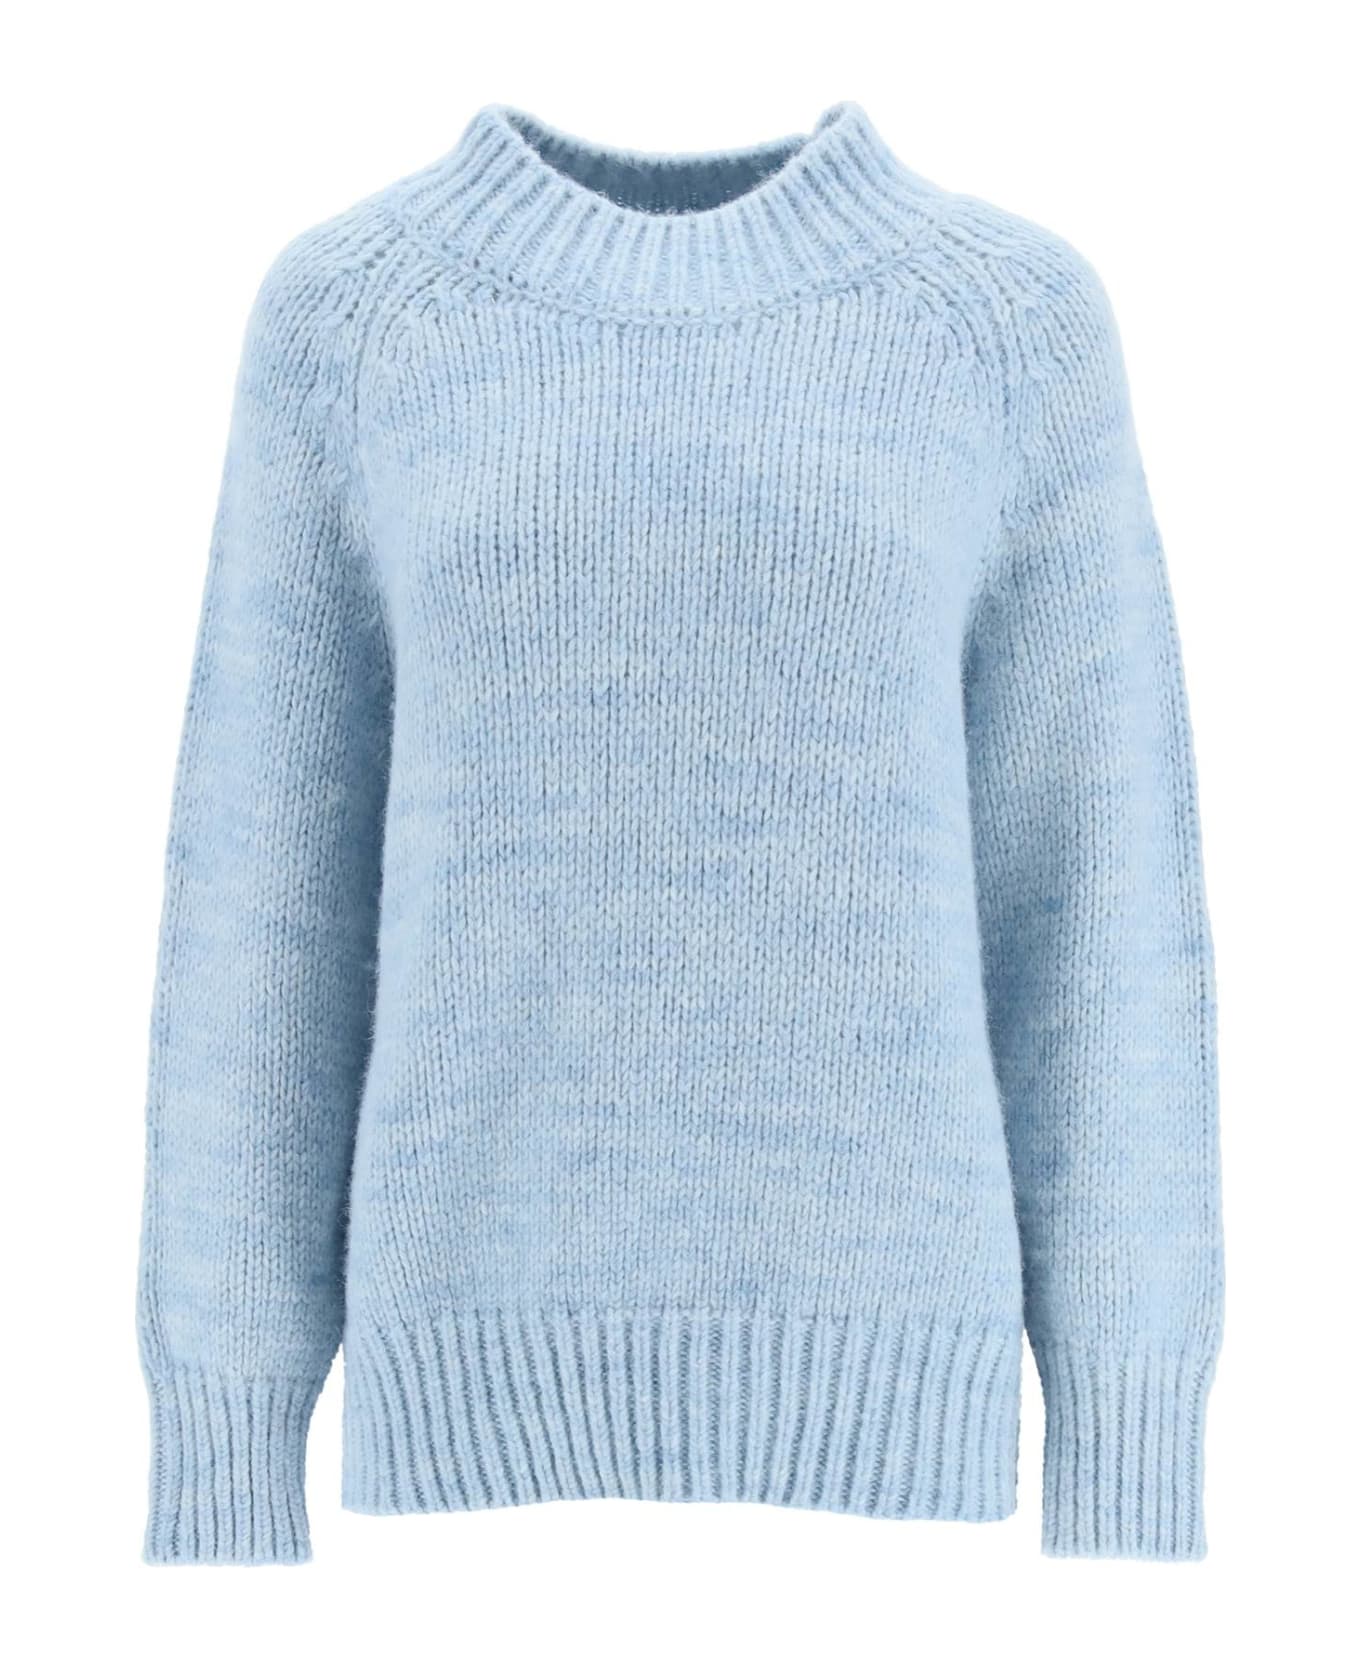 Maison Margiela Ribbed Sweater - PALE BLUE (Light blue)